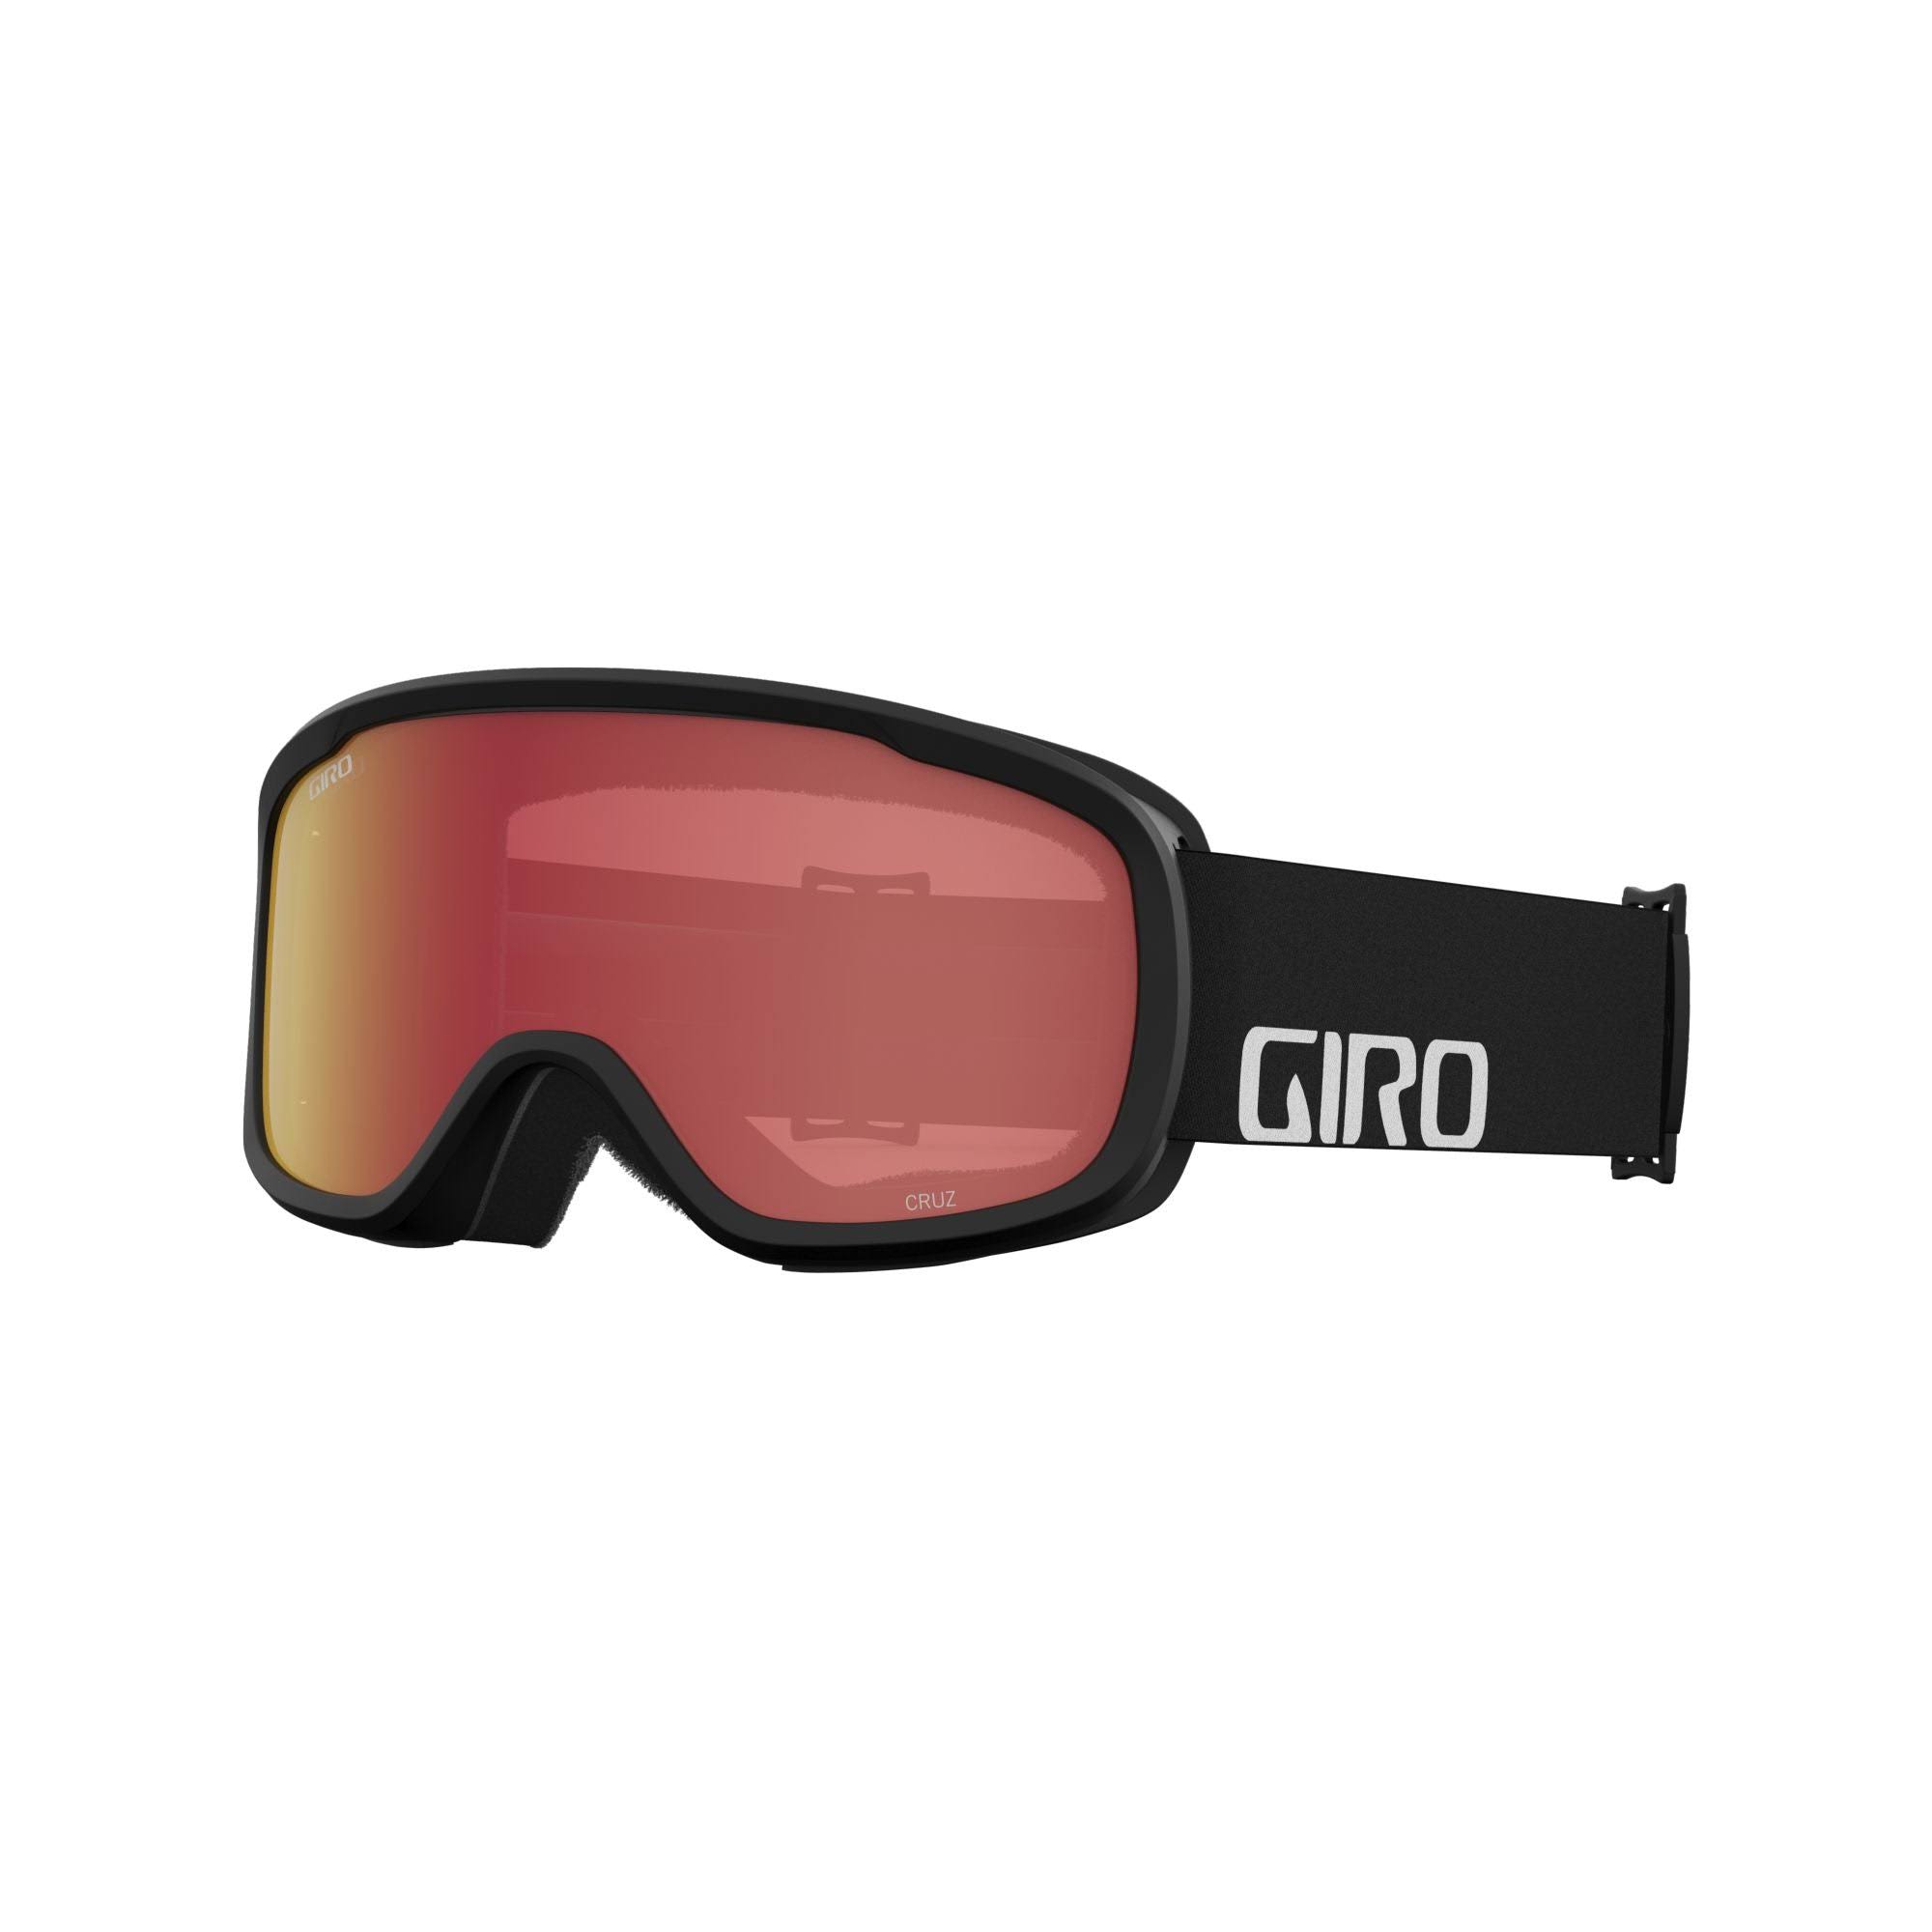 Giro Cruz Goggles - Black